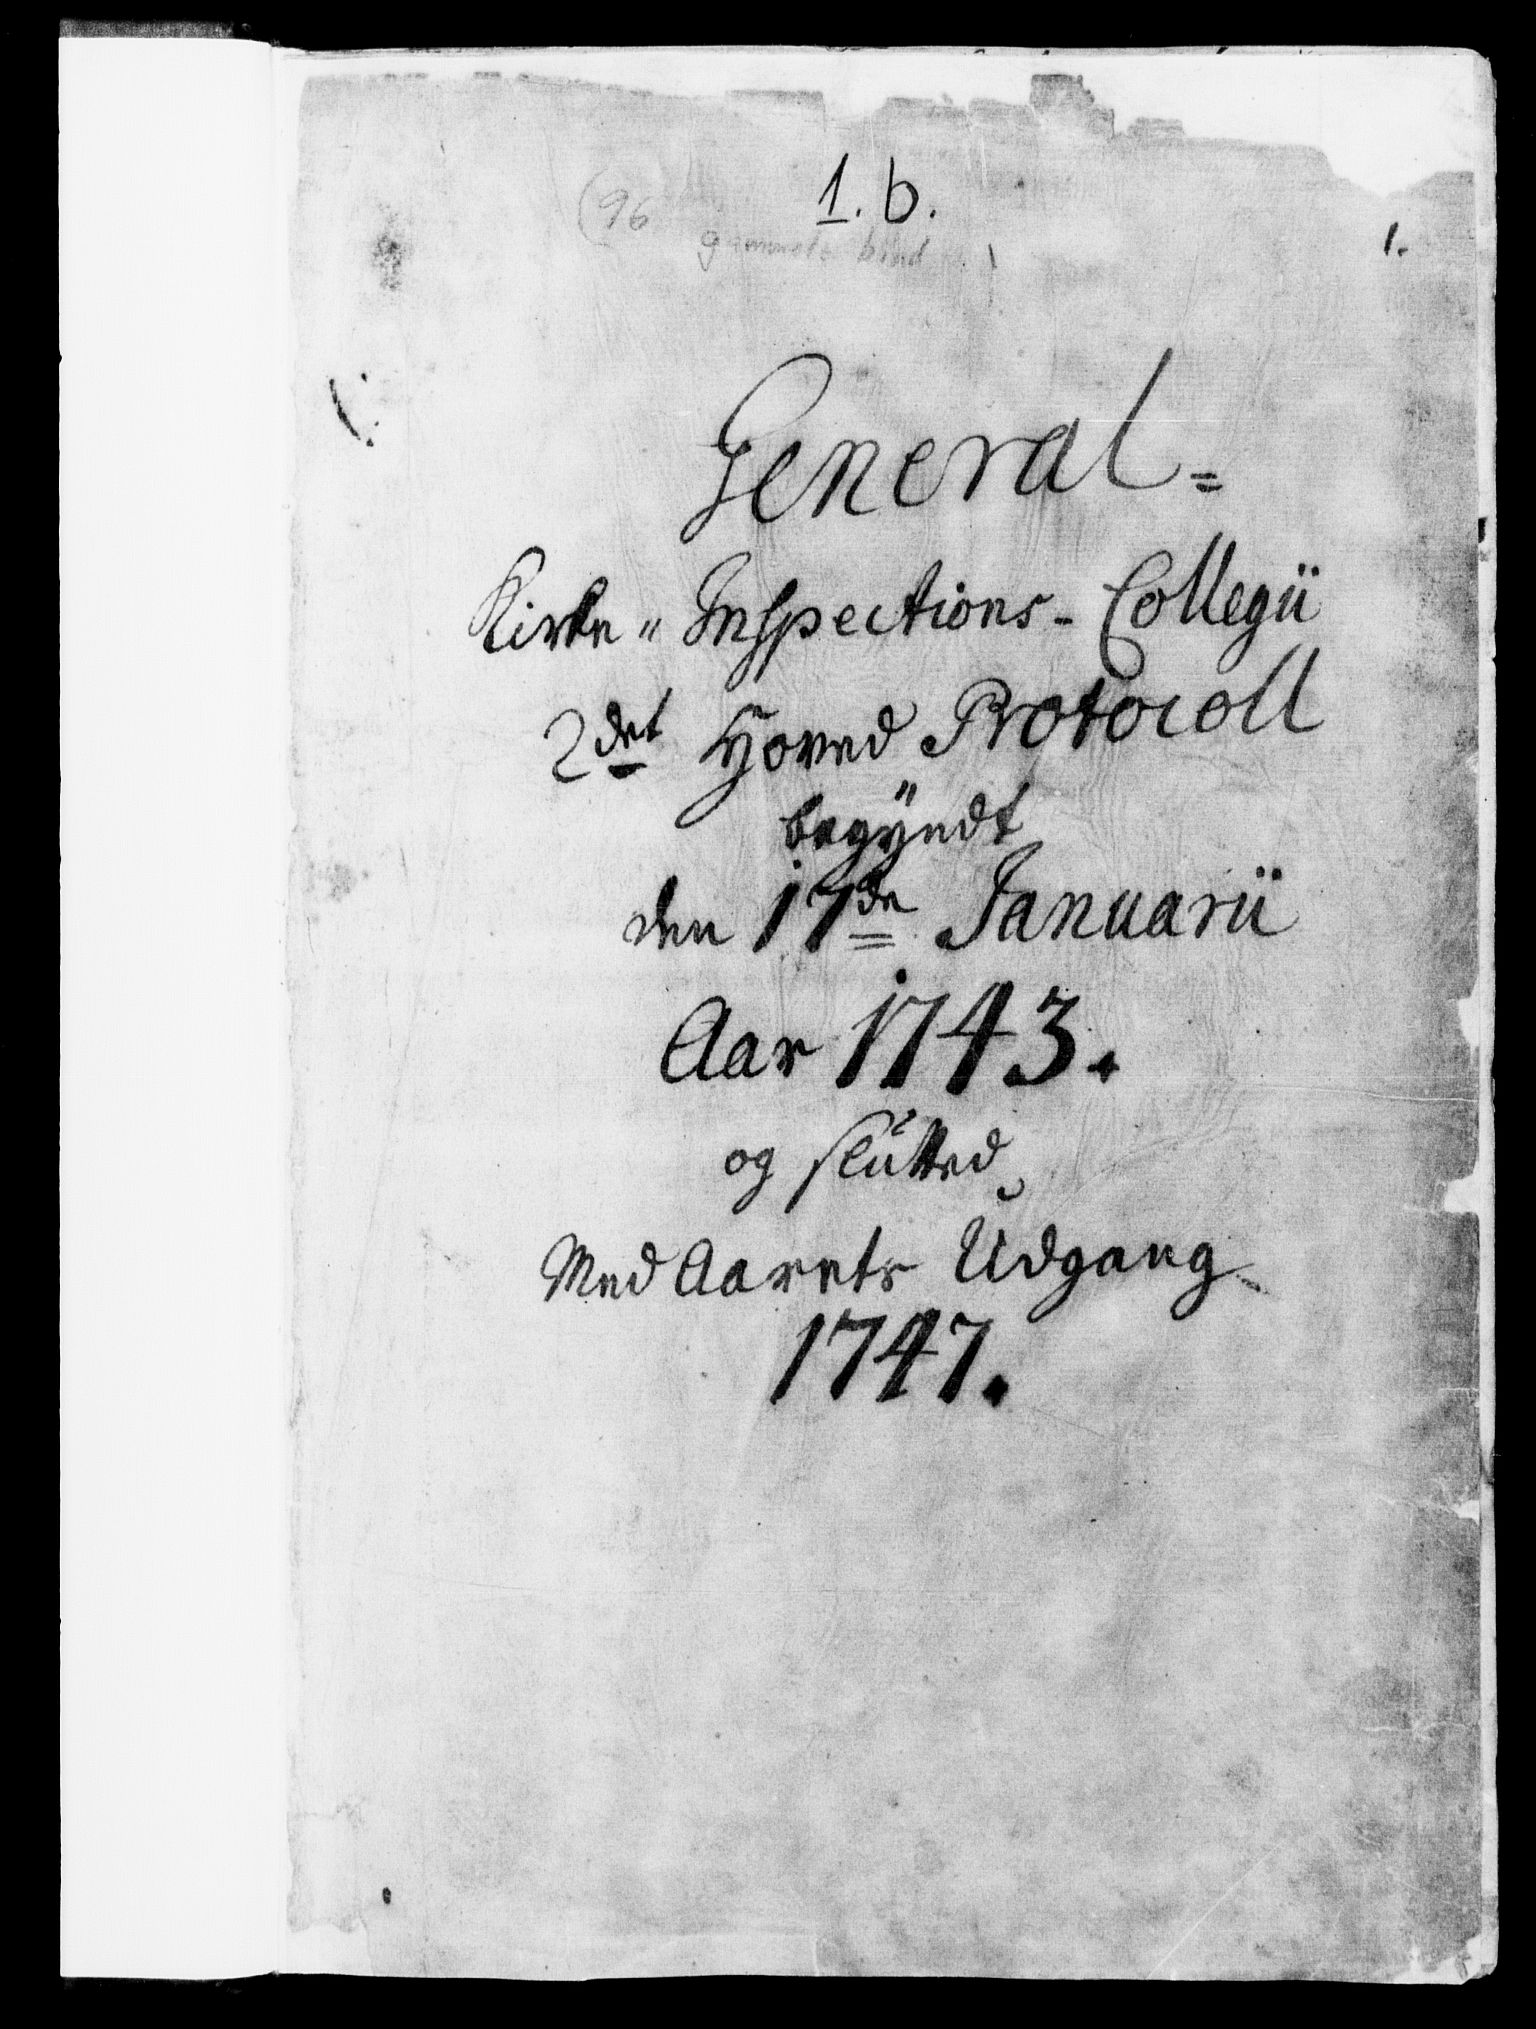 Generalkirkeinspektionskollegiet, DRA/A-0008/F4-01/F4-01-02: General Kirke-Inspections Collegii Hovedprotocoll, 1743-1747